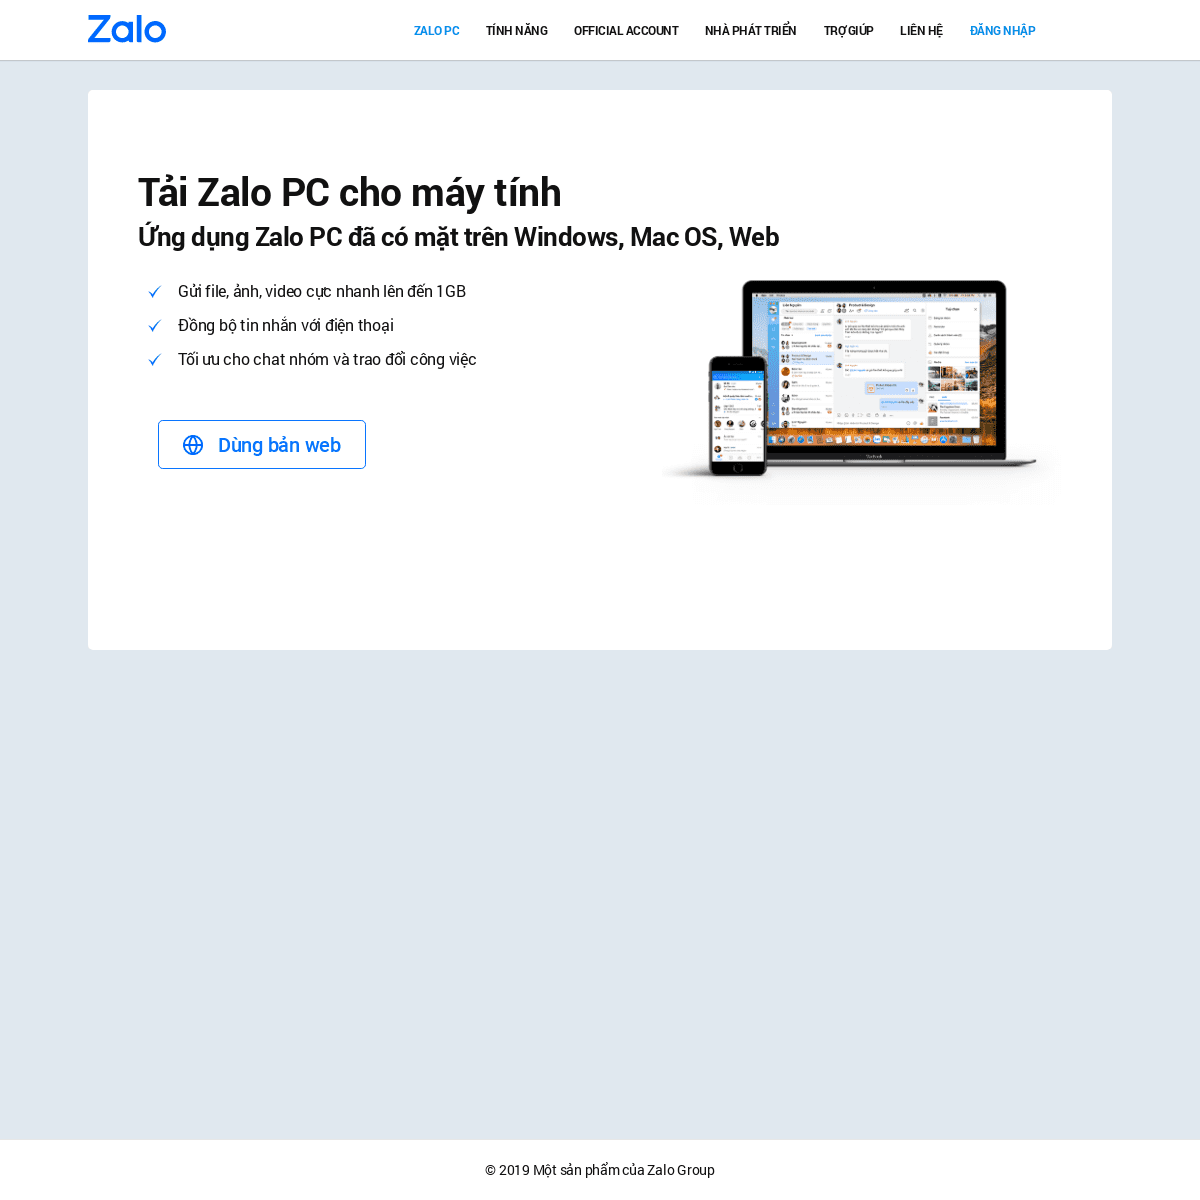 A complete backup of zaloapp.com